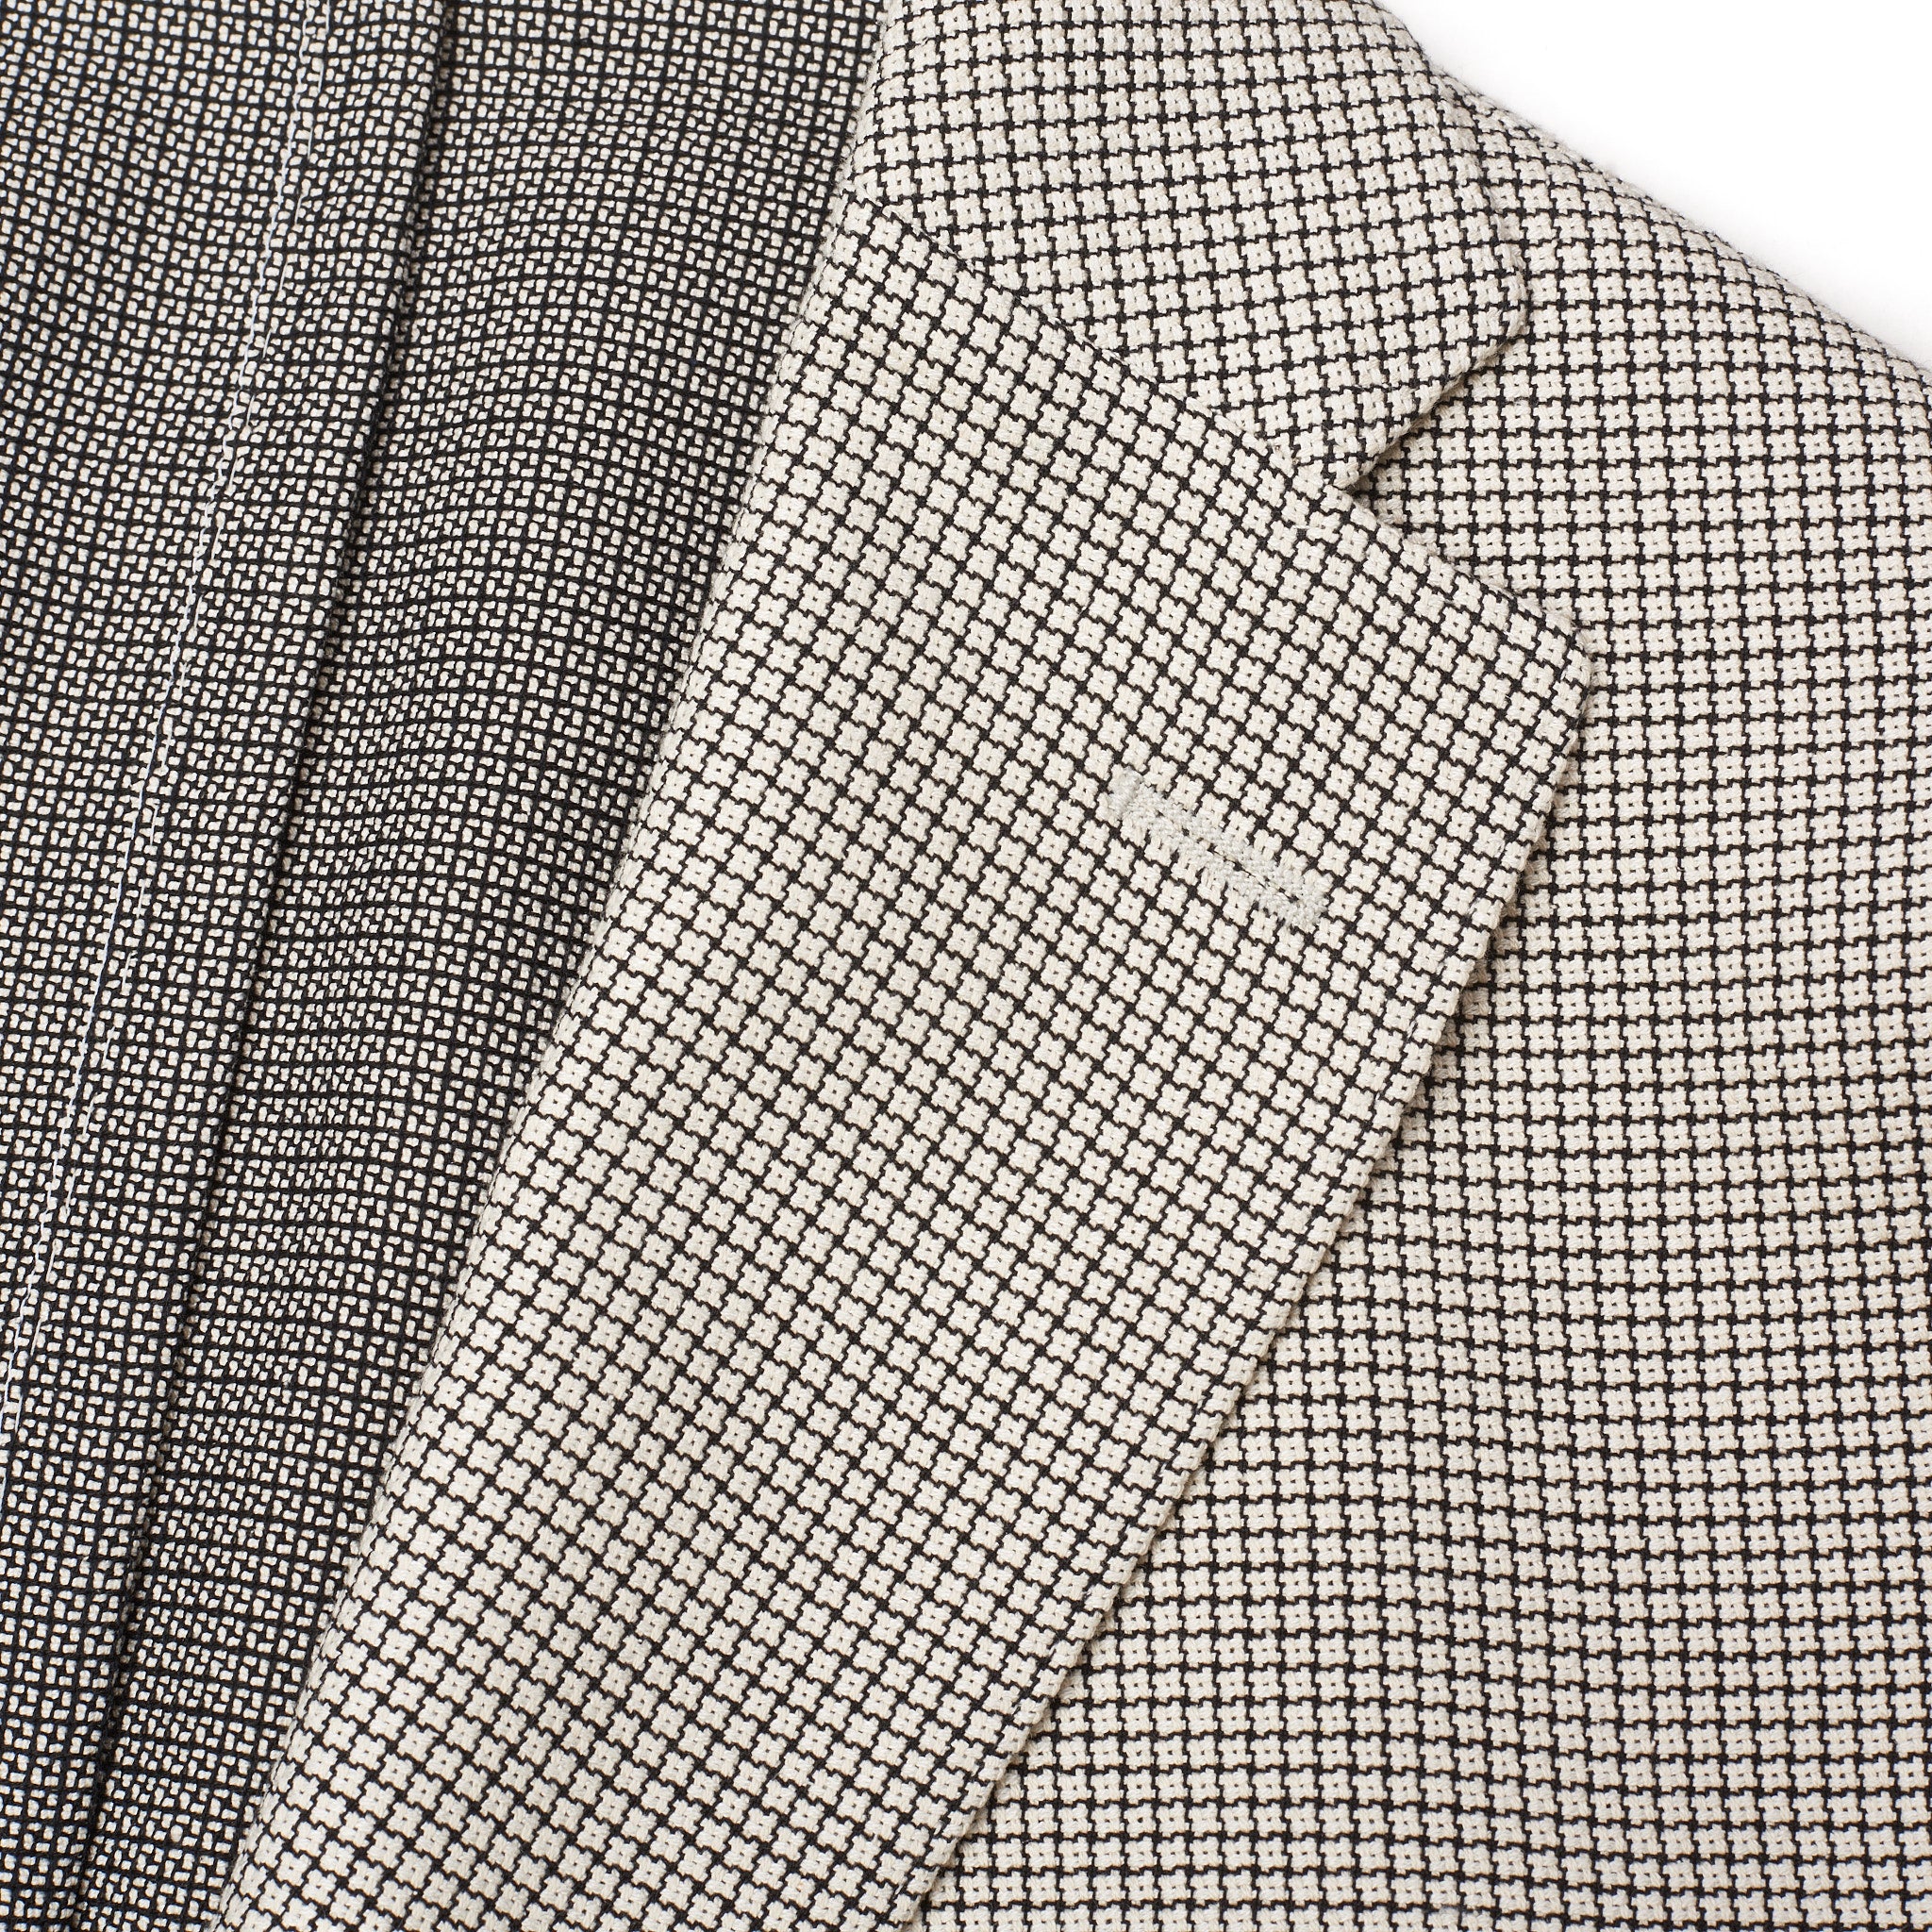 BOGLIOLI "K. Jacket" Beige Jacquard Silk-Cotton Unlined Jacket NEW BOGLIOLI